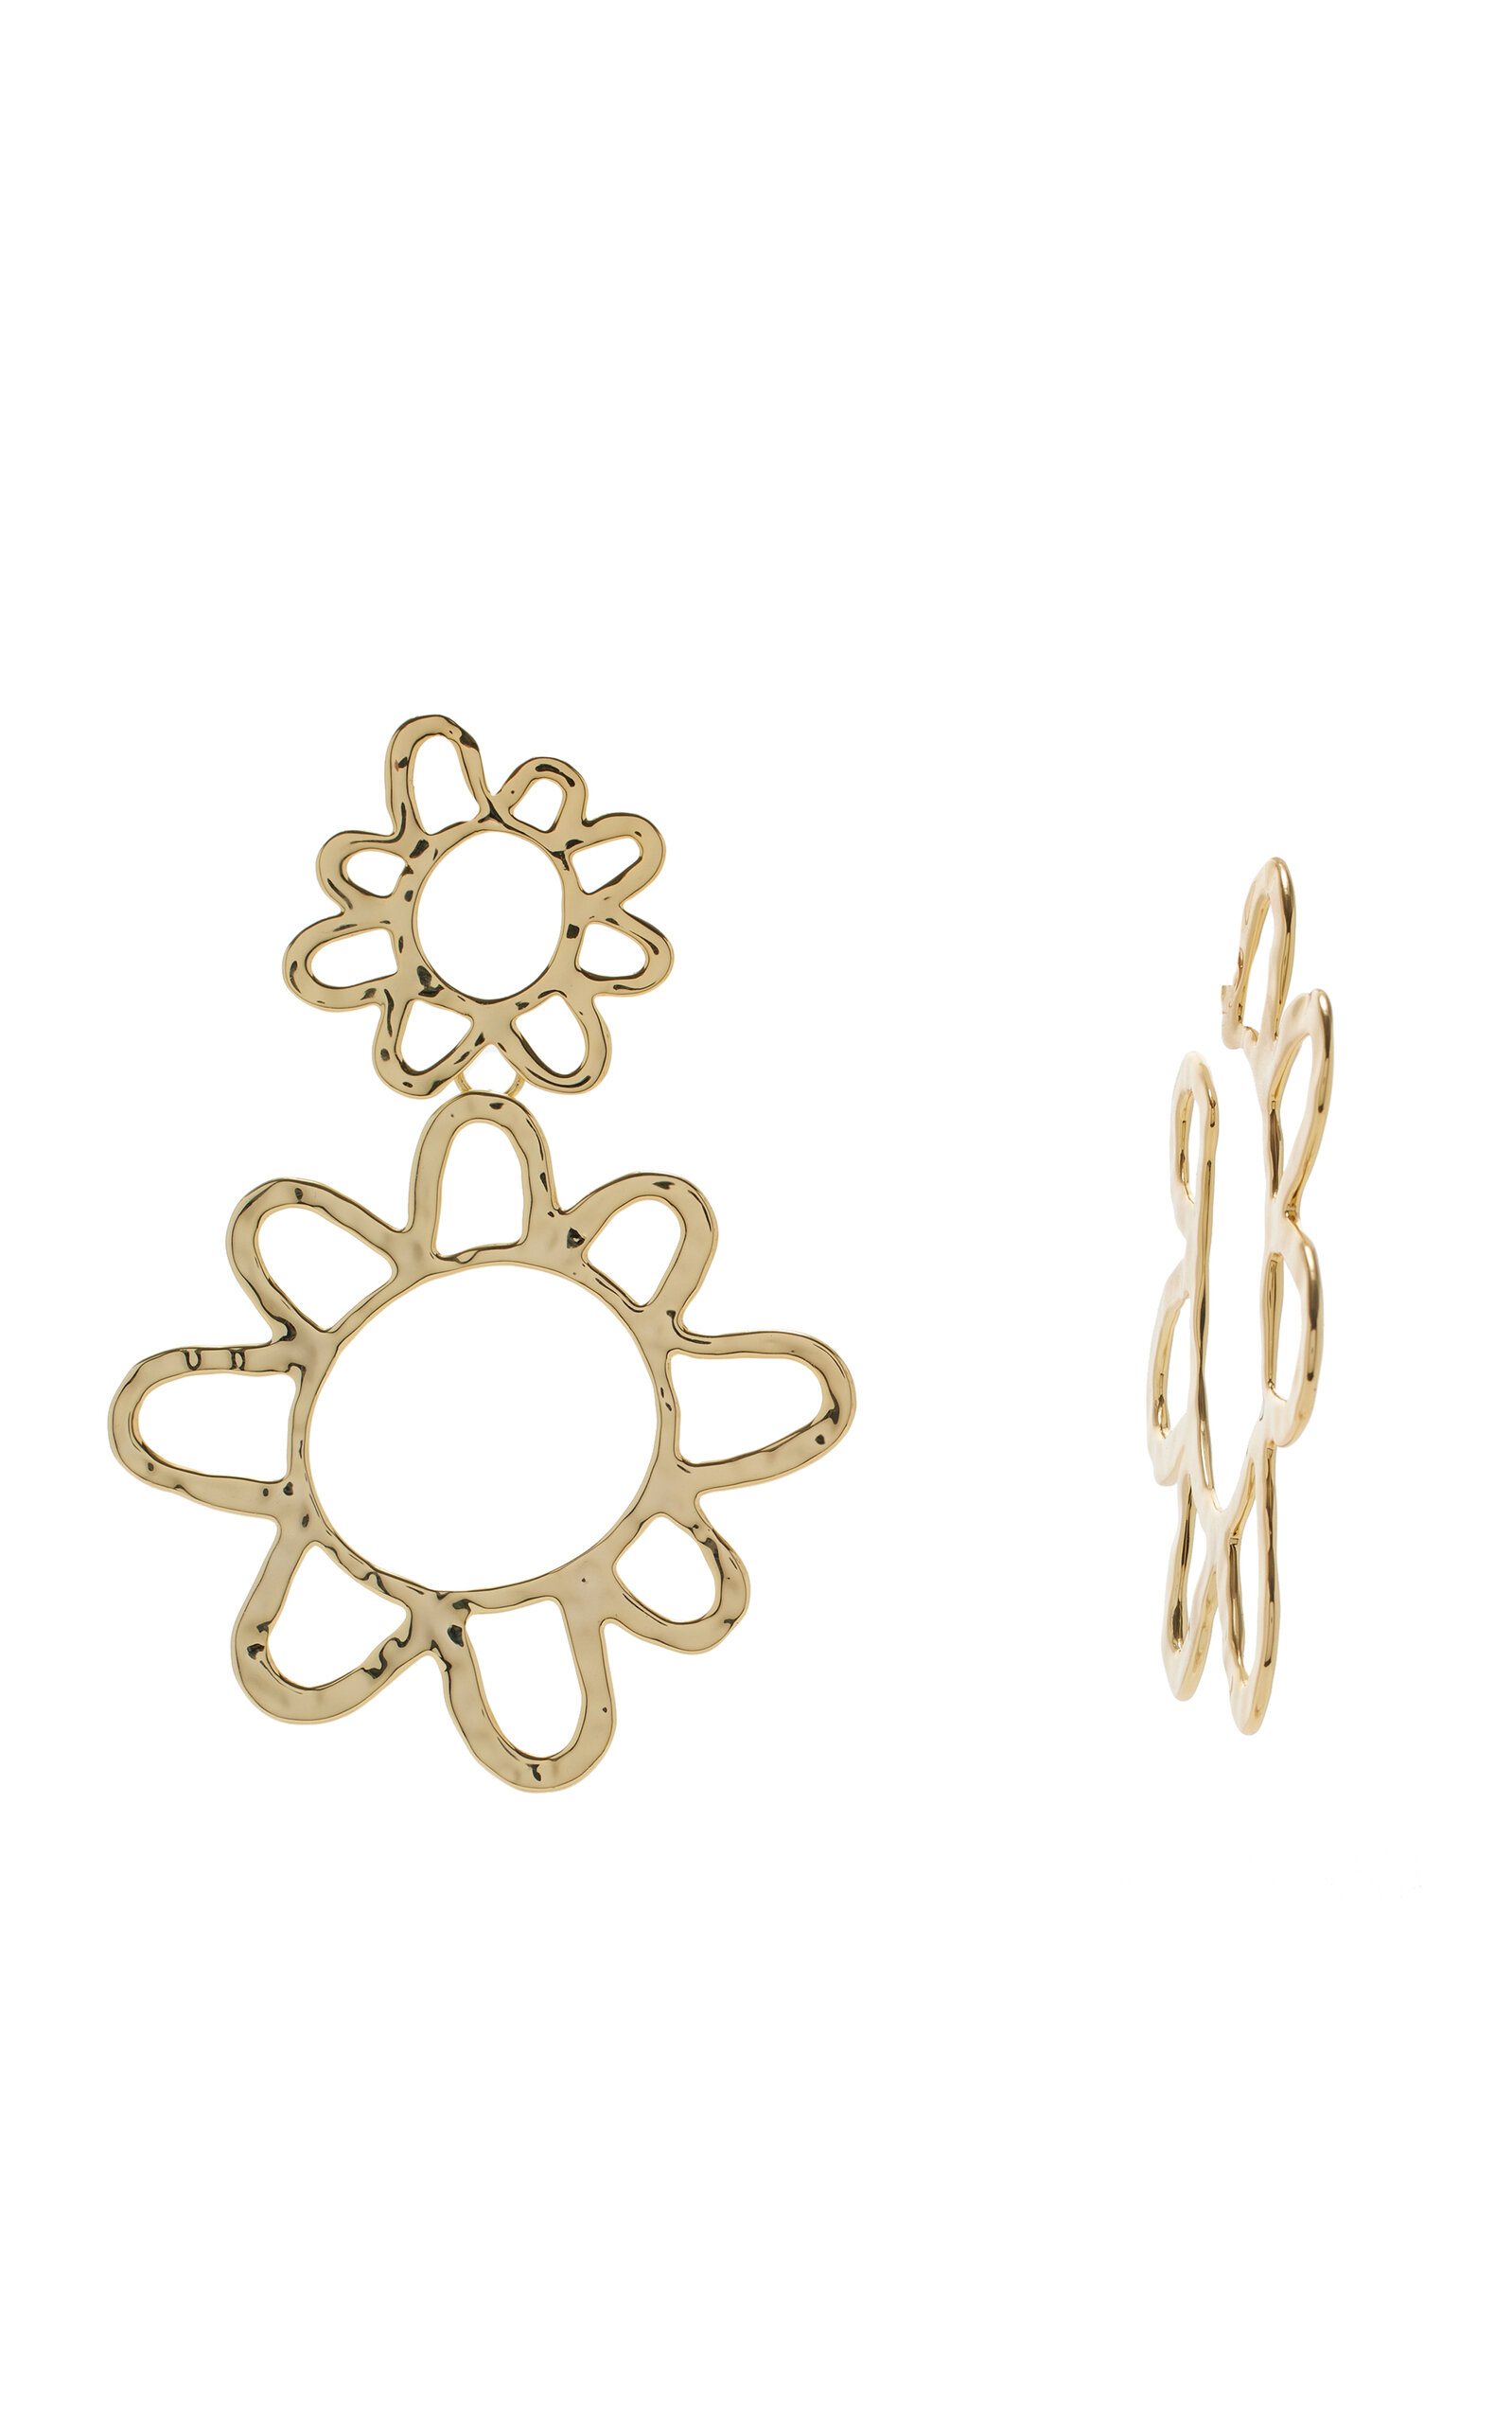 Cult Gaia - Morgan Gold-Tone Earrings - Gold - OS - Moda Operandi - Gifts For Her